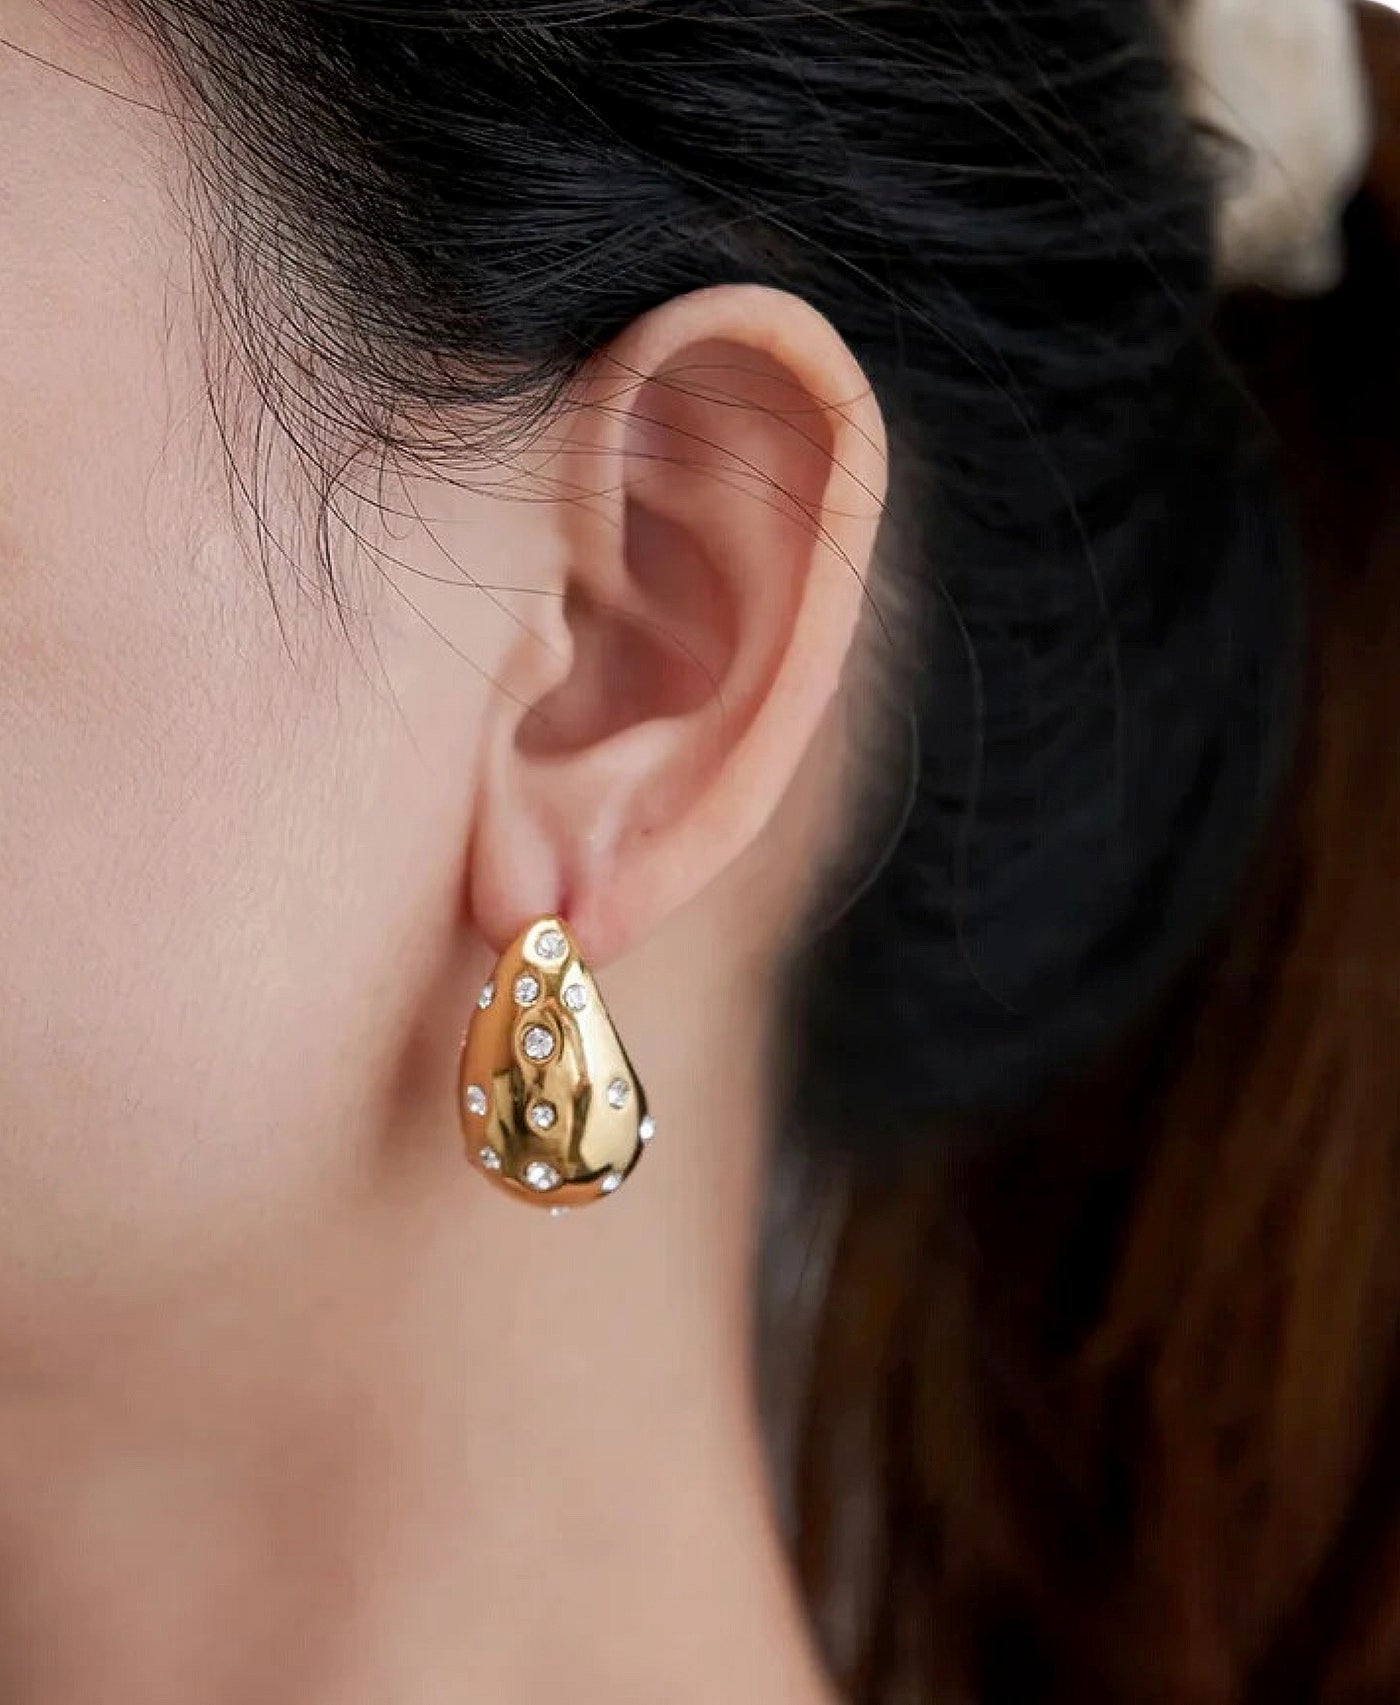 Polished Teardrop Earrings w/ Rhinestones & Pearls image 1